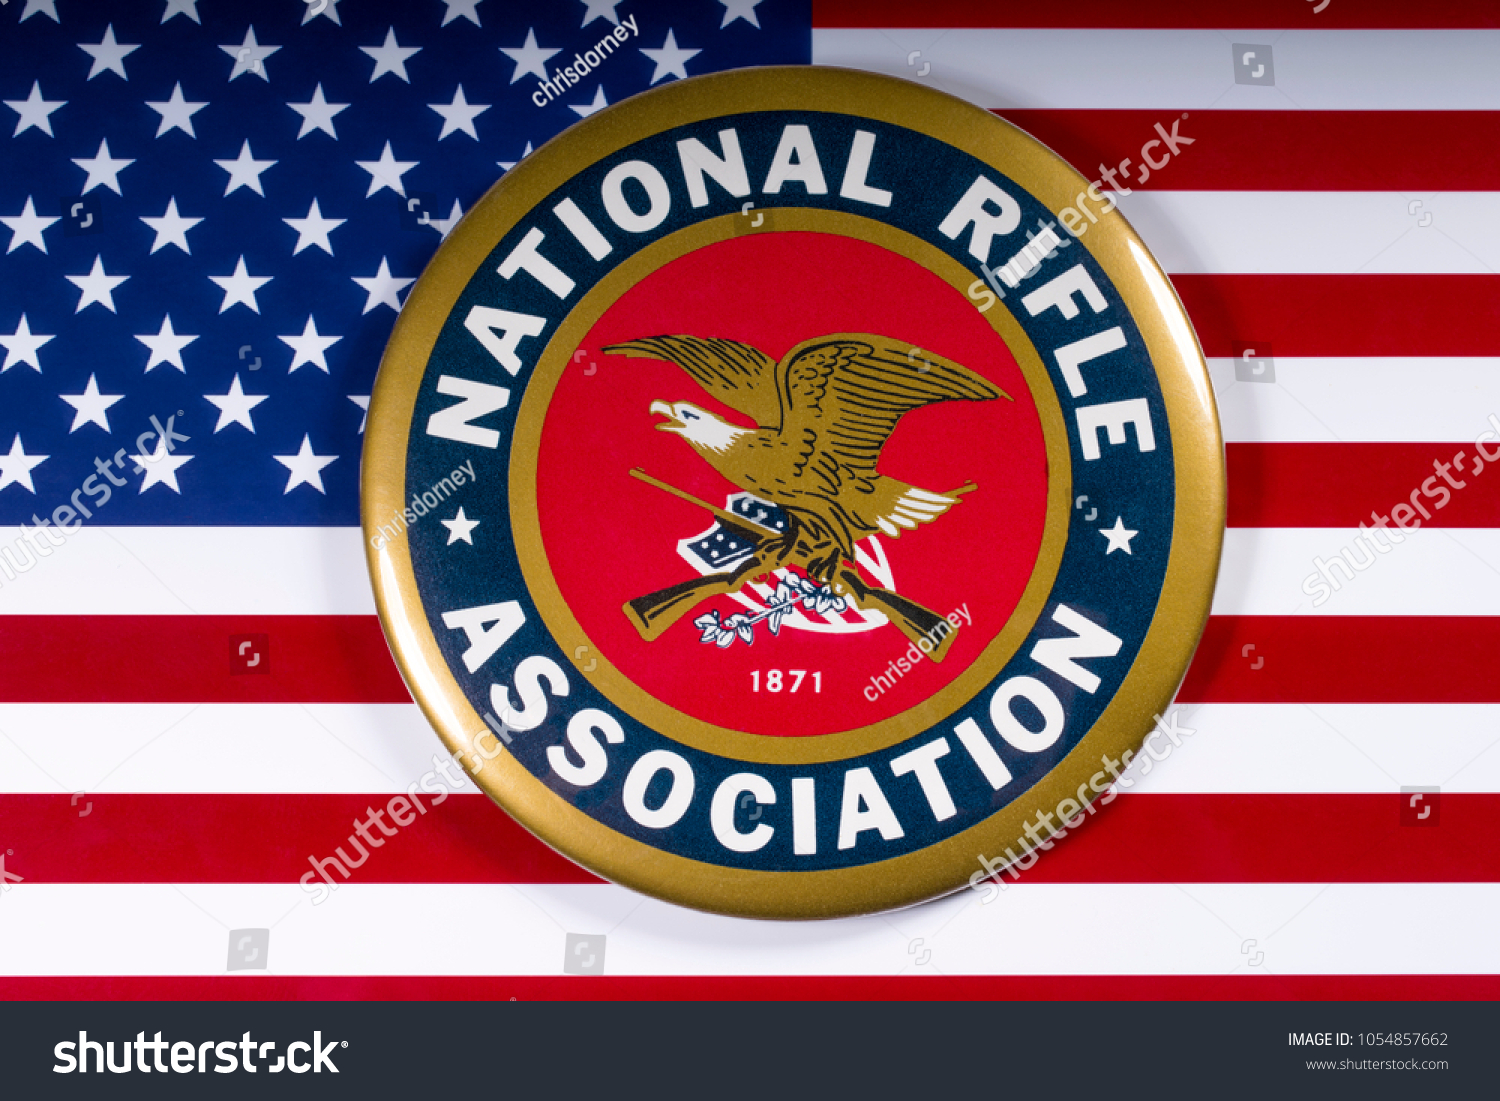 national-rifle-association-images-stock-photos-vectors-shutterstock